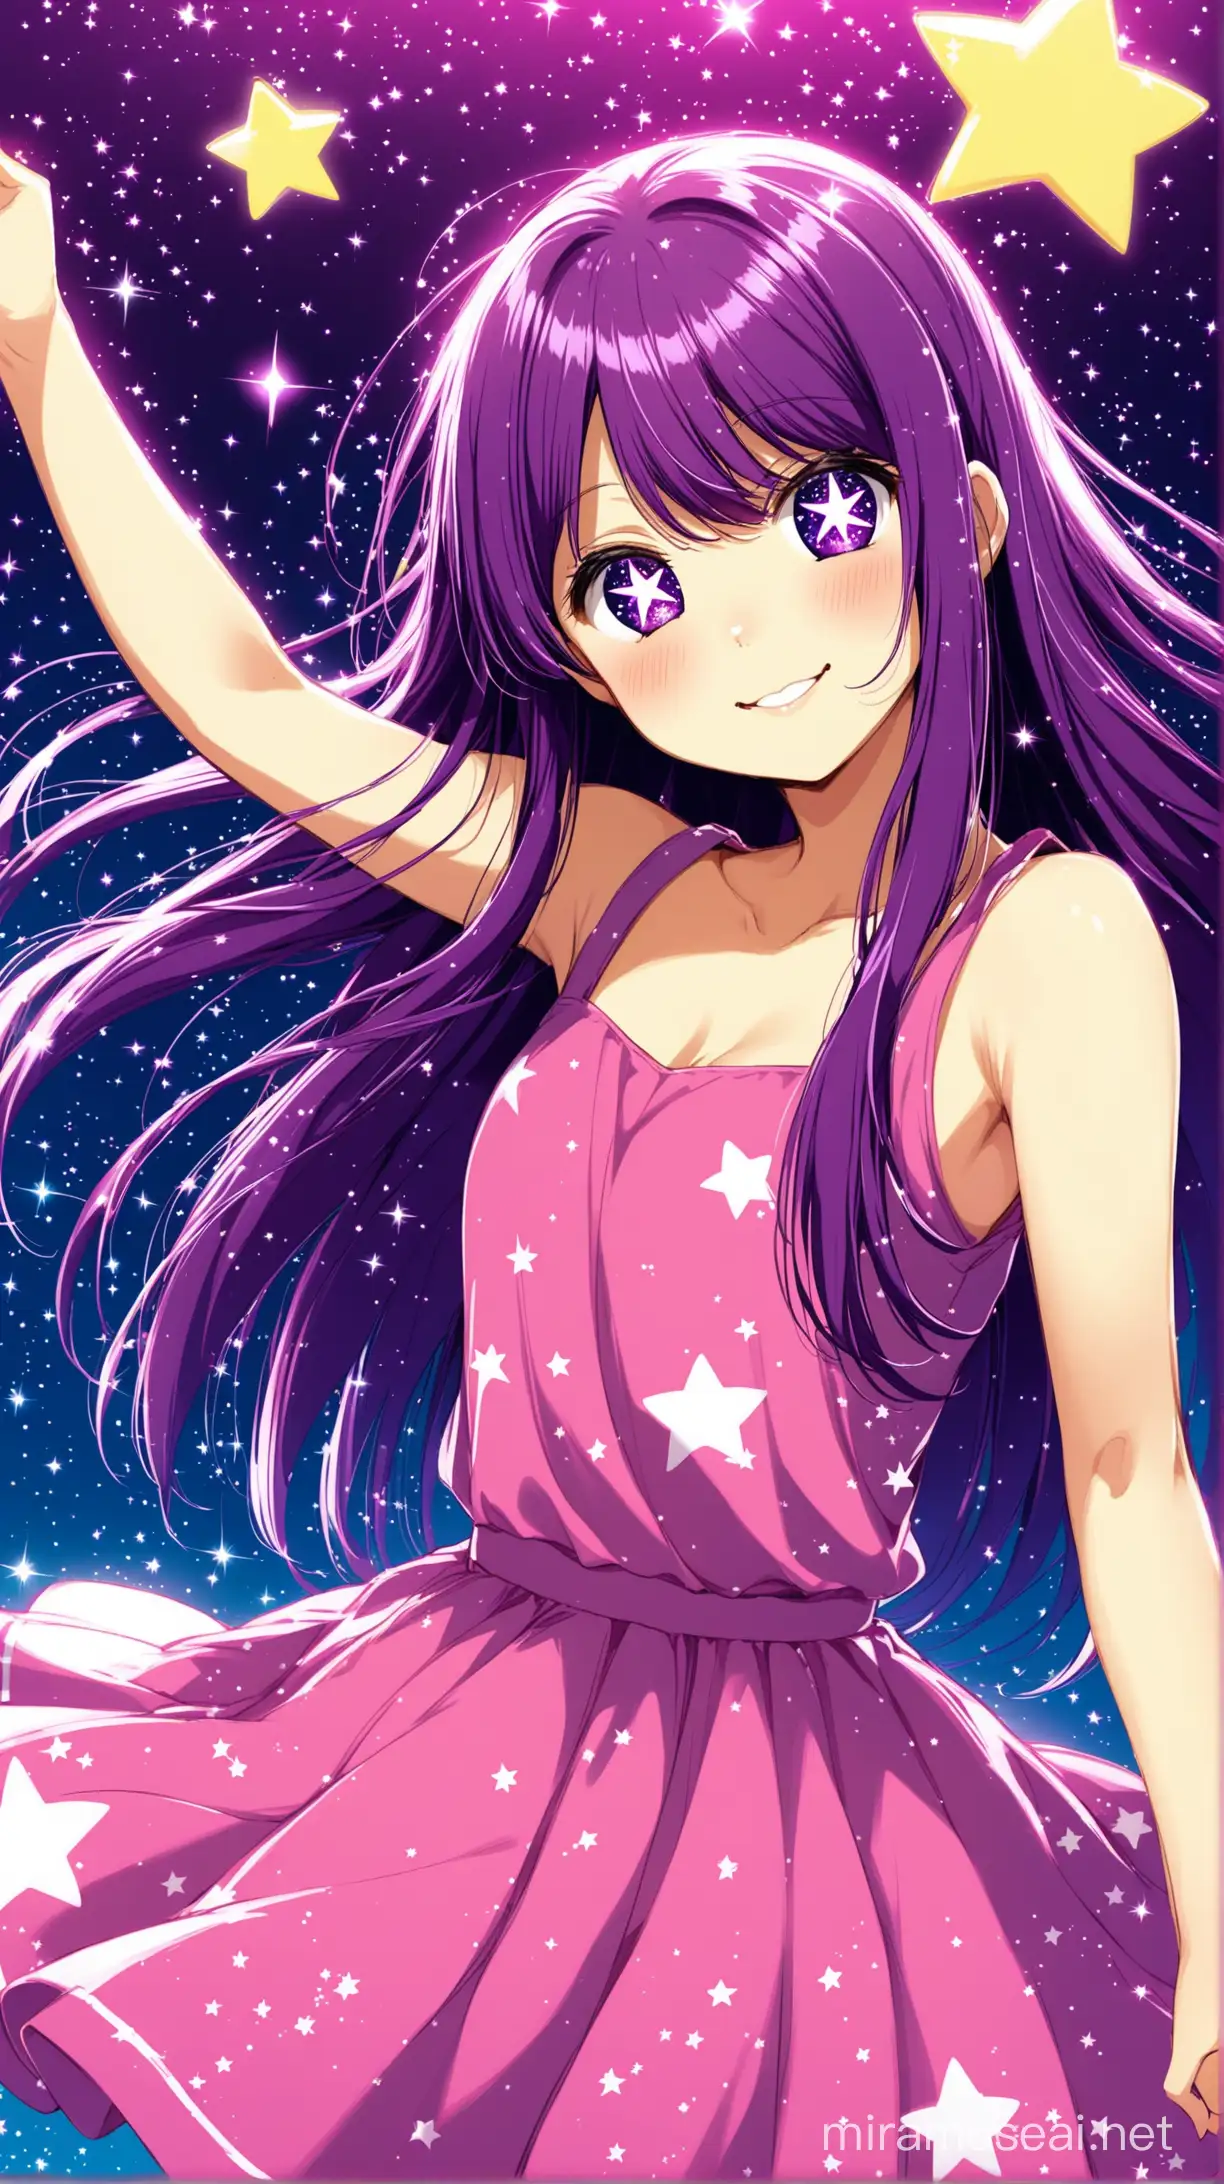 Ai Hoshino Dancing with Long Purple Hair and Cute Starry Eyes